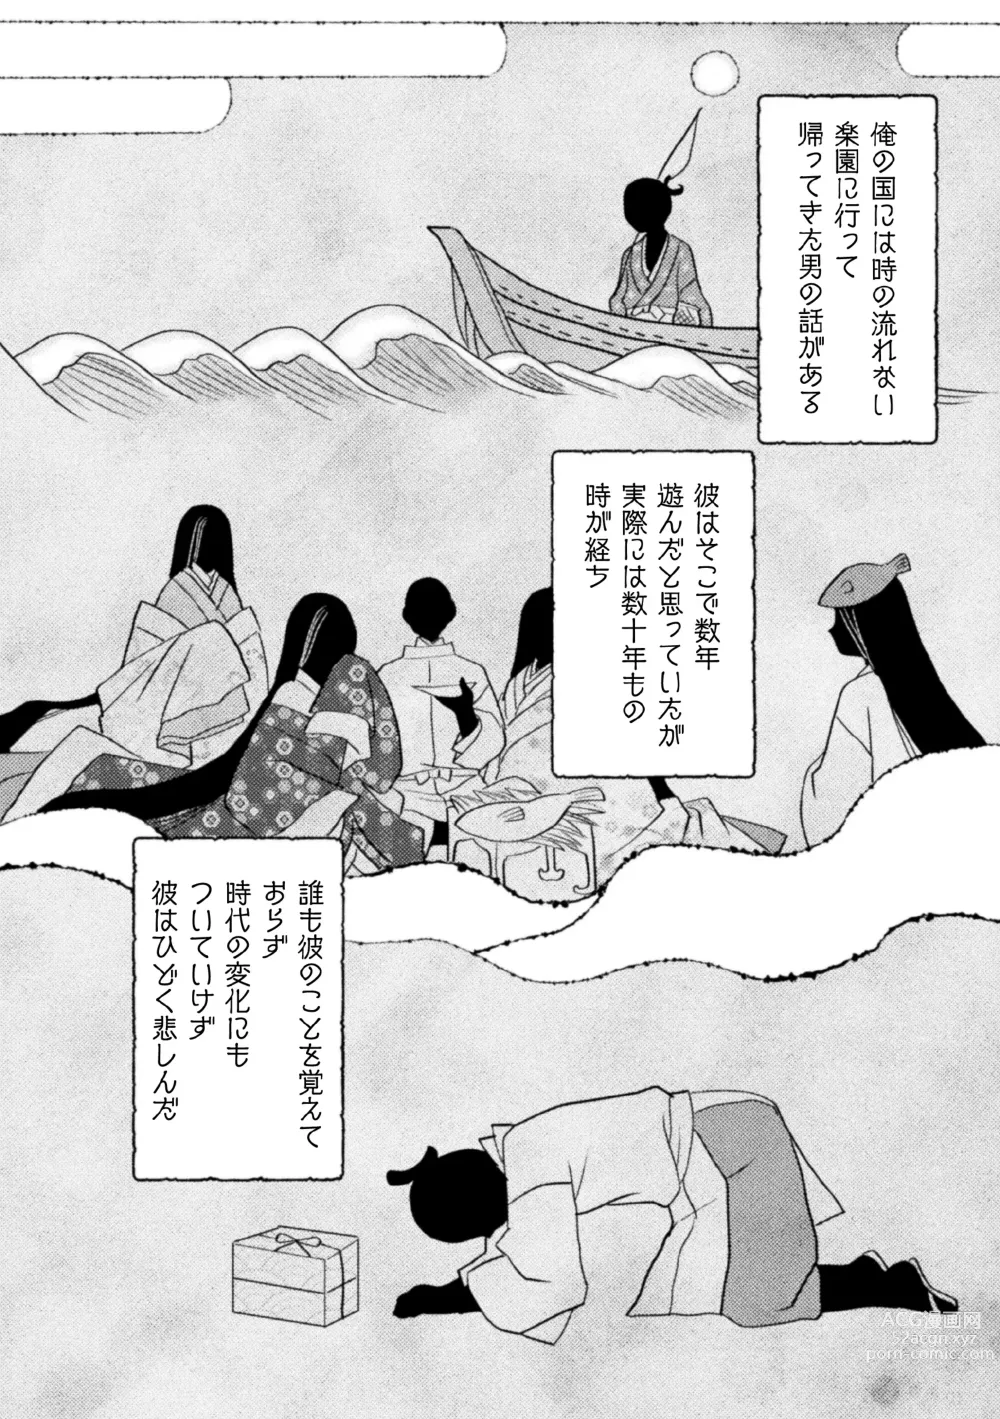 Page 39 of manga Zekkai Rougoku Kan Eien no Rougoku Kouhen